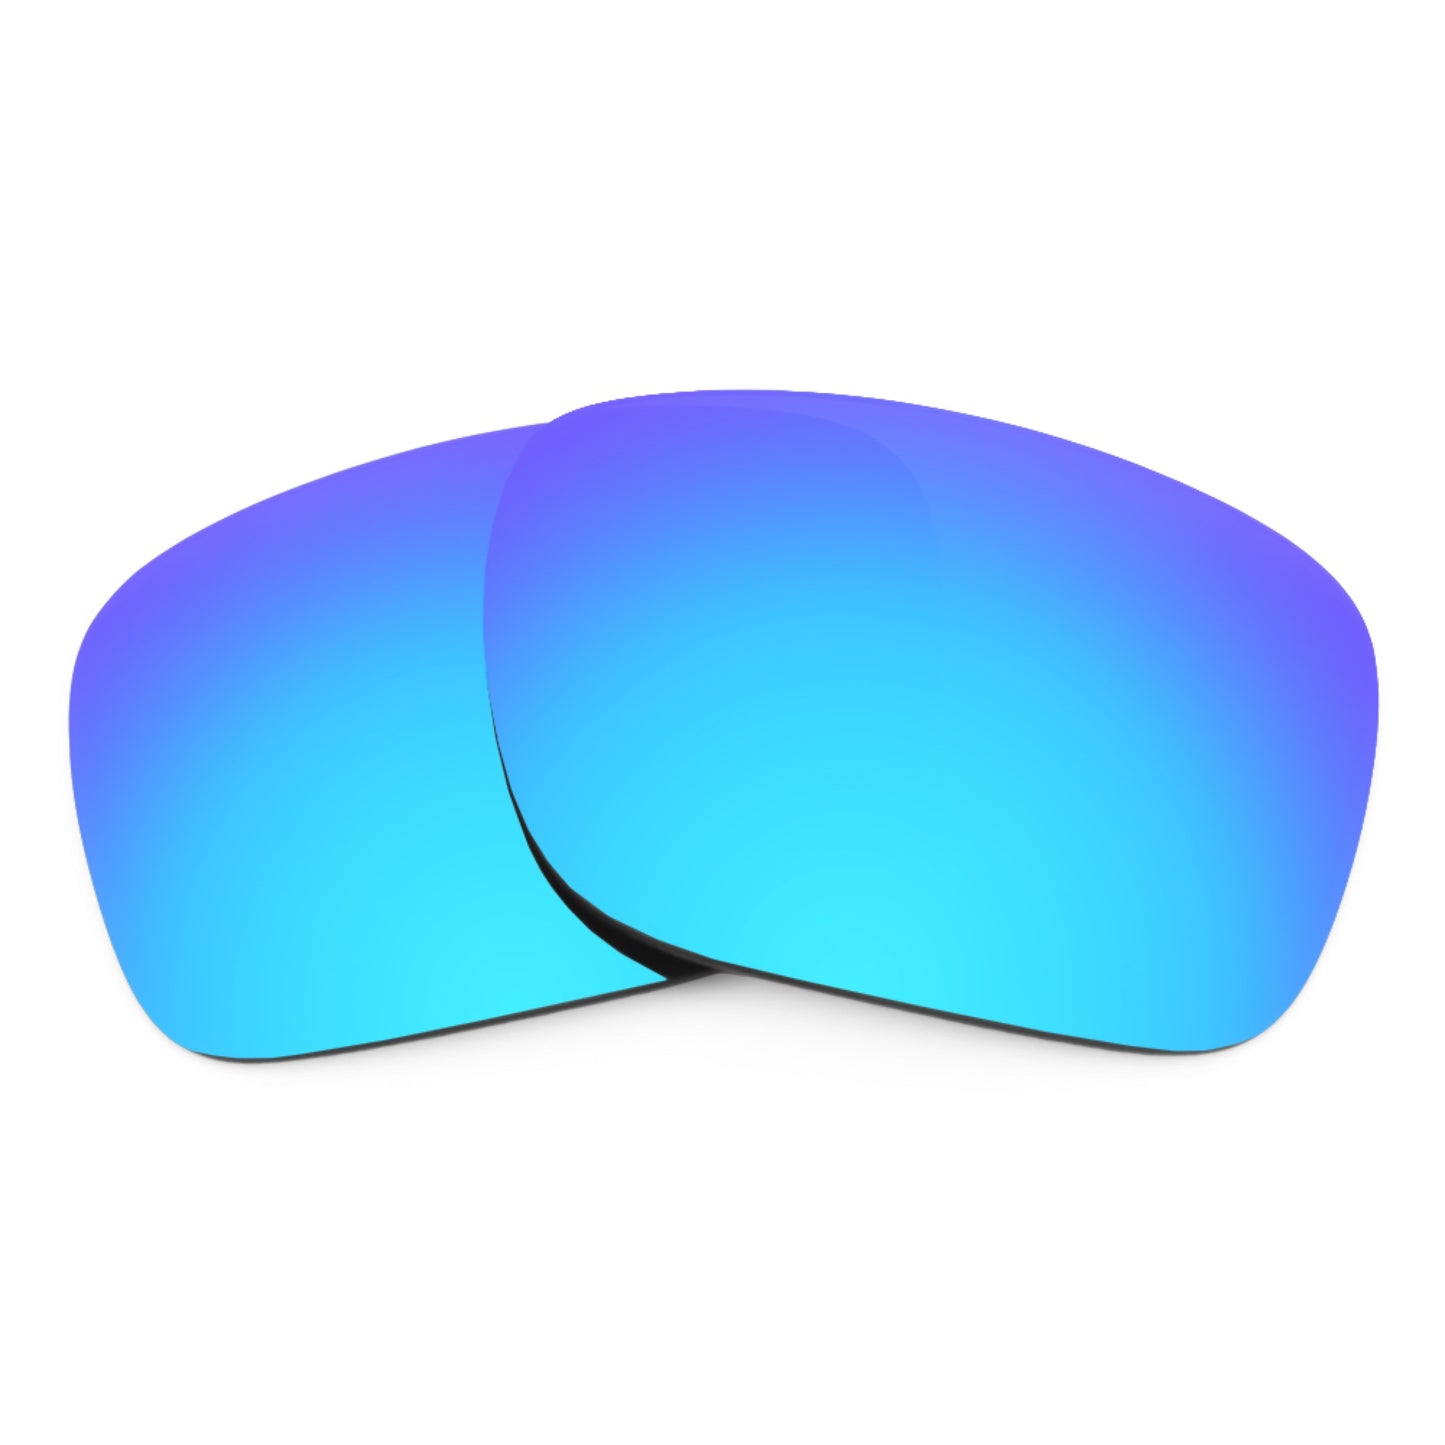 Revant replacement lenses for Oakley Sliver XL (Low Bridge Fit) Elite Polarized Ice Blue